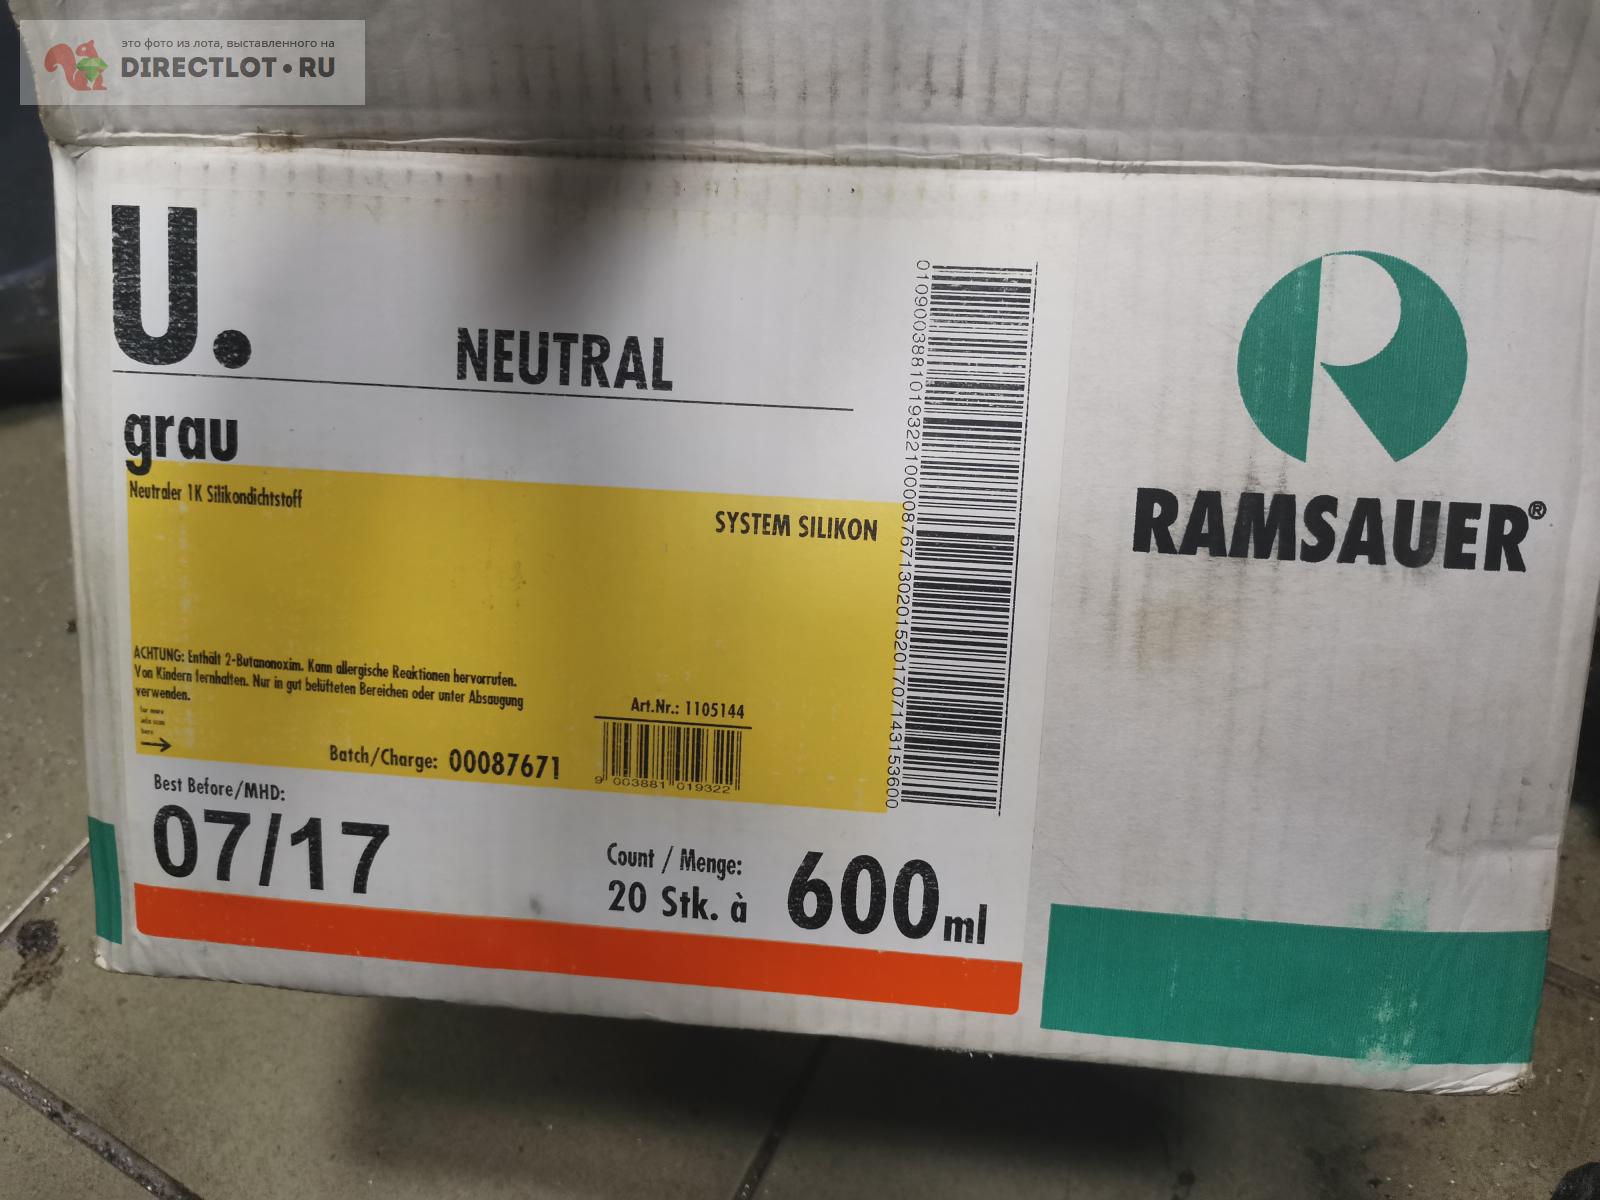  силиконовый Ramsauer  в Тюмени цена 300 Р на DIRECTLOT .